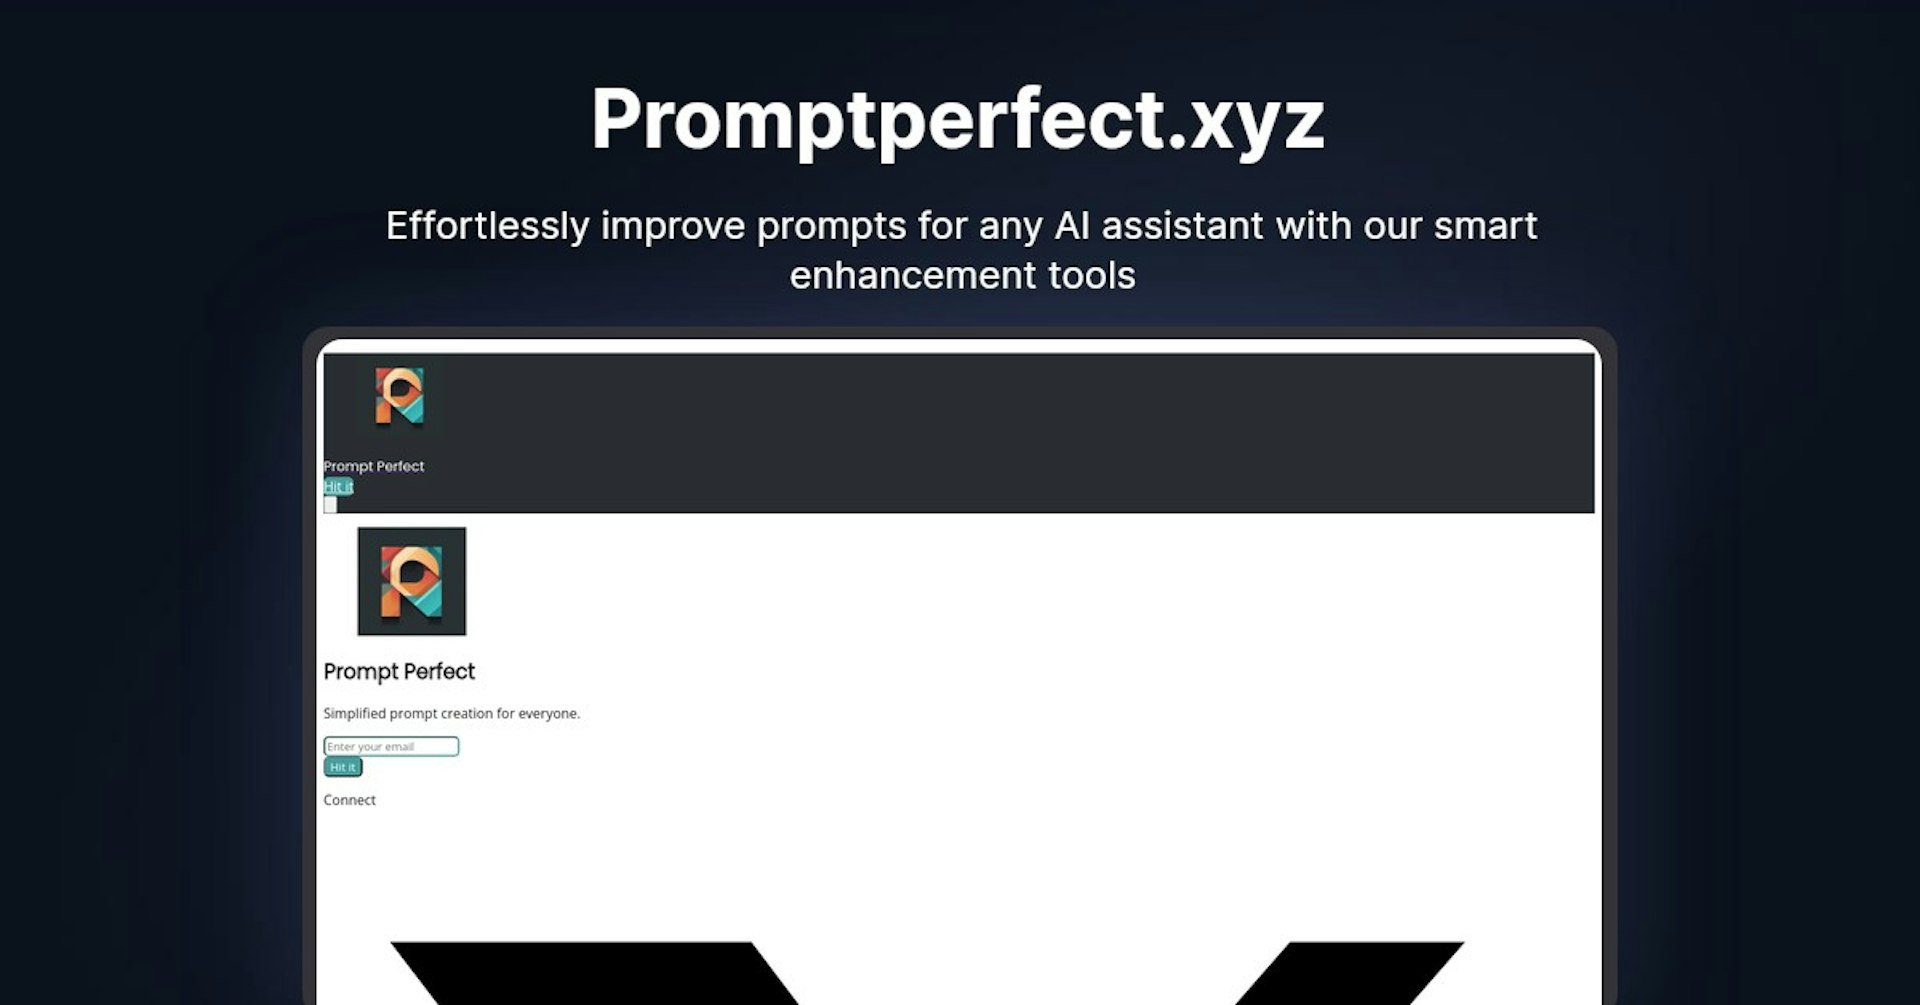 Promptperfect.xyz